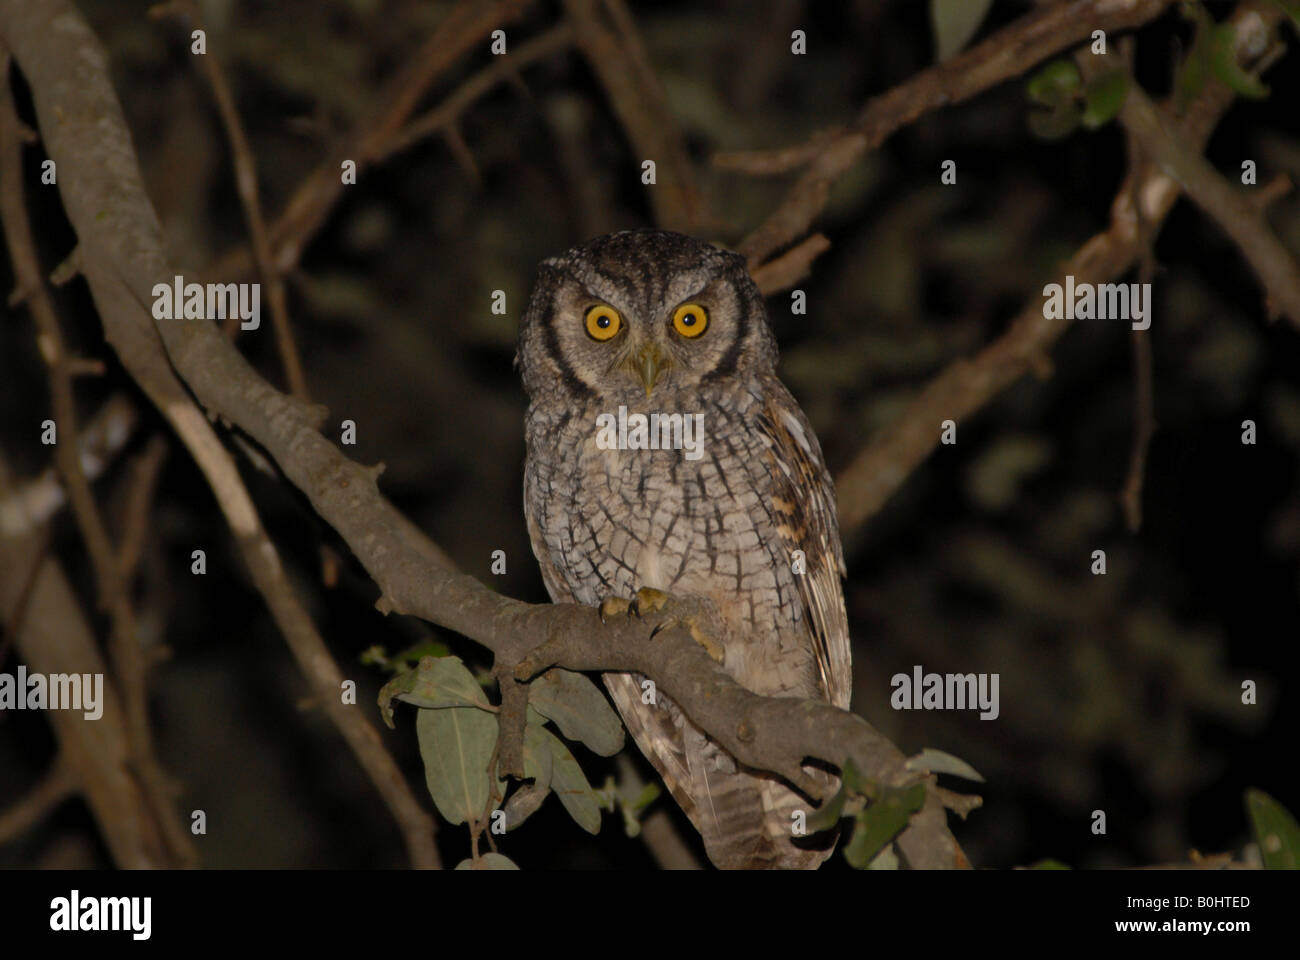 Tropical Screech Owl (Megascops choliba) perched on a branch, Boqueron, Gran Chaco, Paraguay, South America Stock Photo